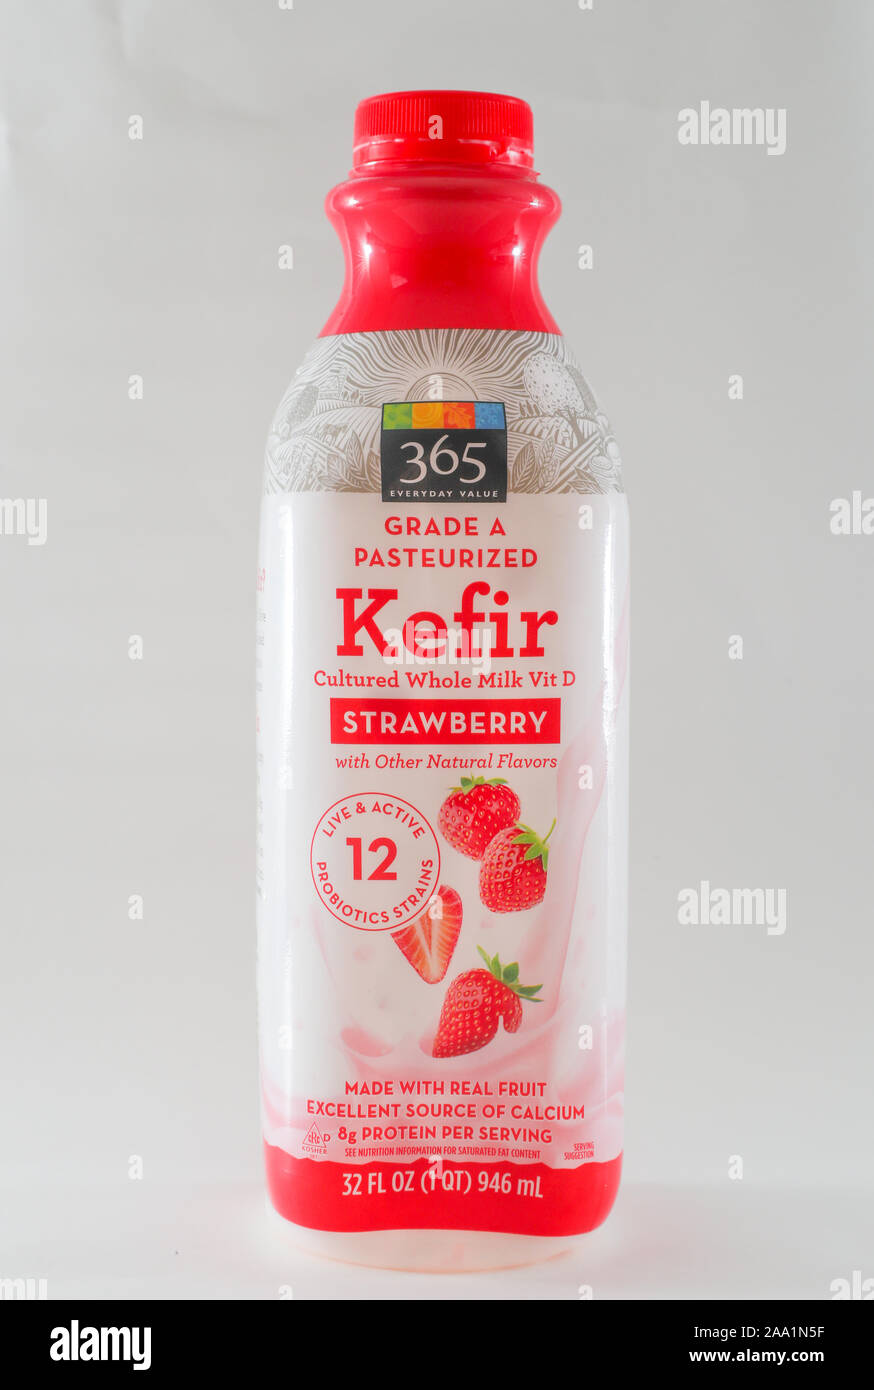 Princeton New Jersey November 18 2019: 365 Everyday Value Kefir Cultured Whole Milk Vitamin D strawberry yogurt - Image Stock Photo